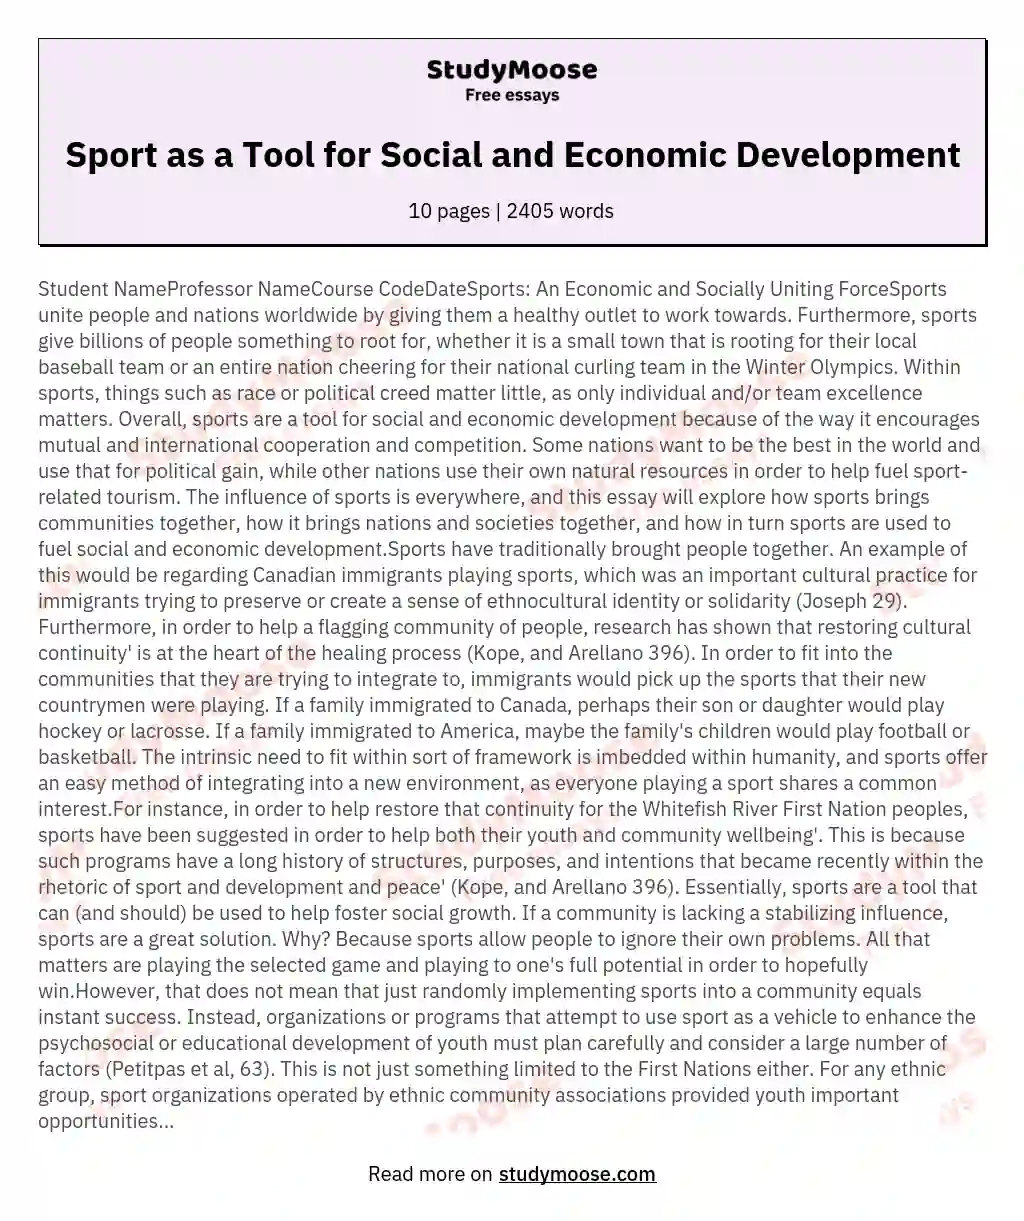 Sport as a Tool for Social and Economic Development essay